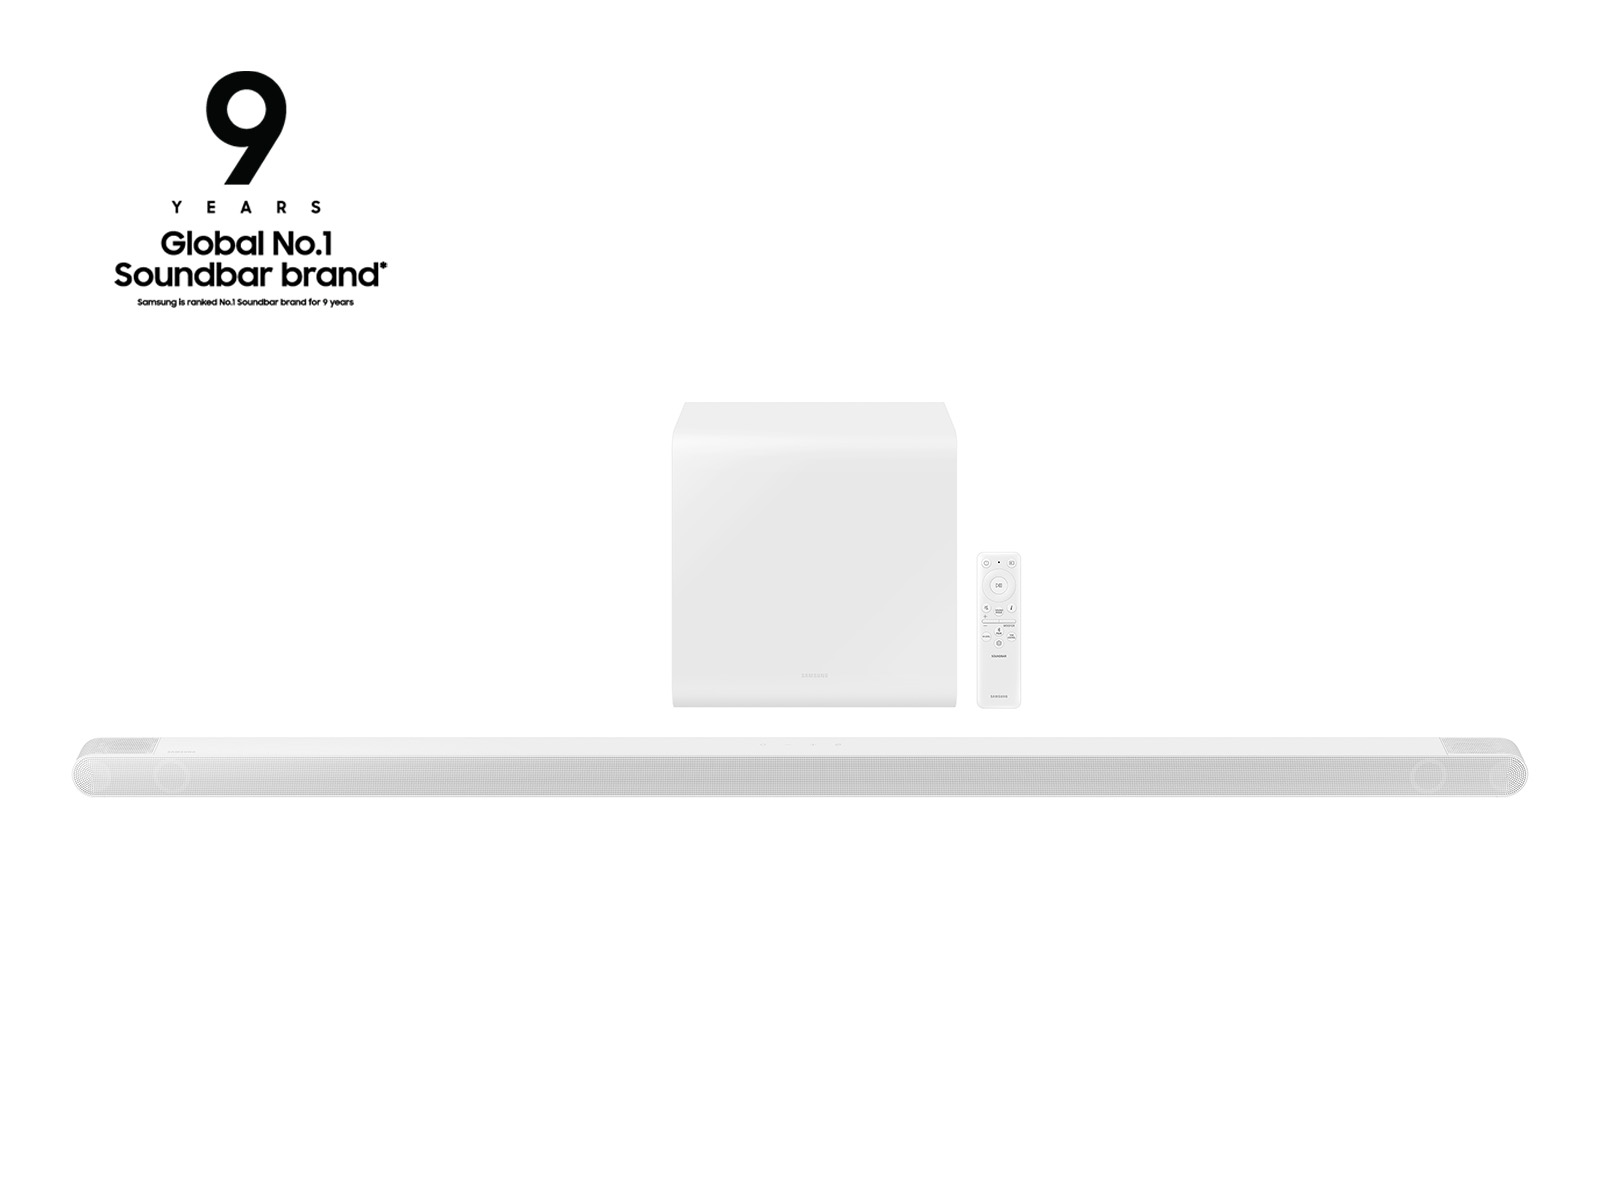 S-series 5.0 ch. Soundbar S60B | Samsung US